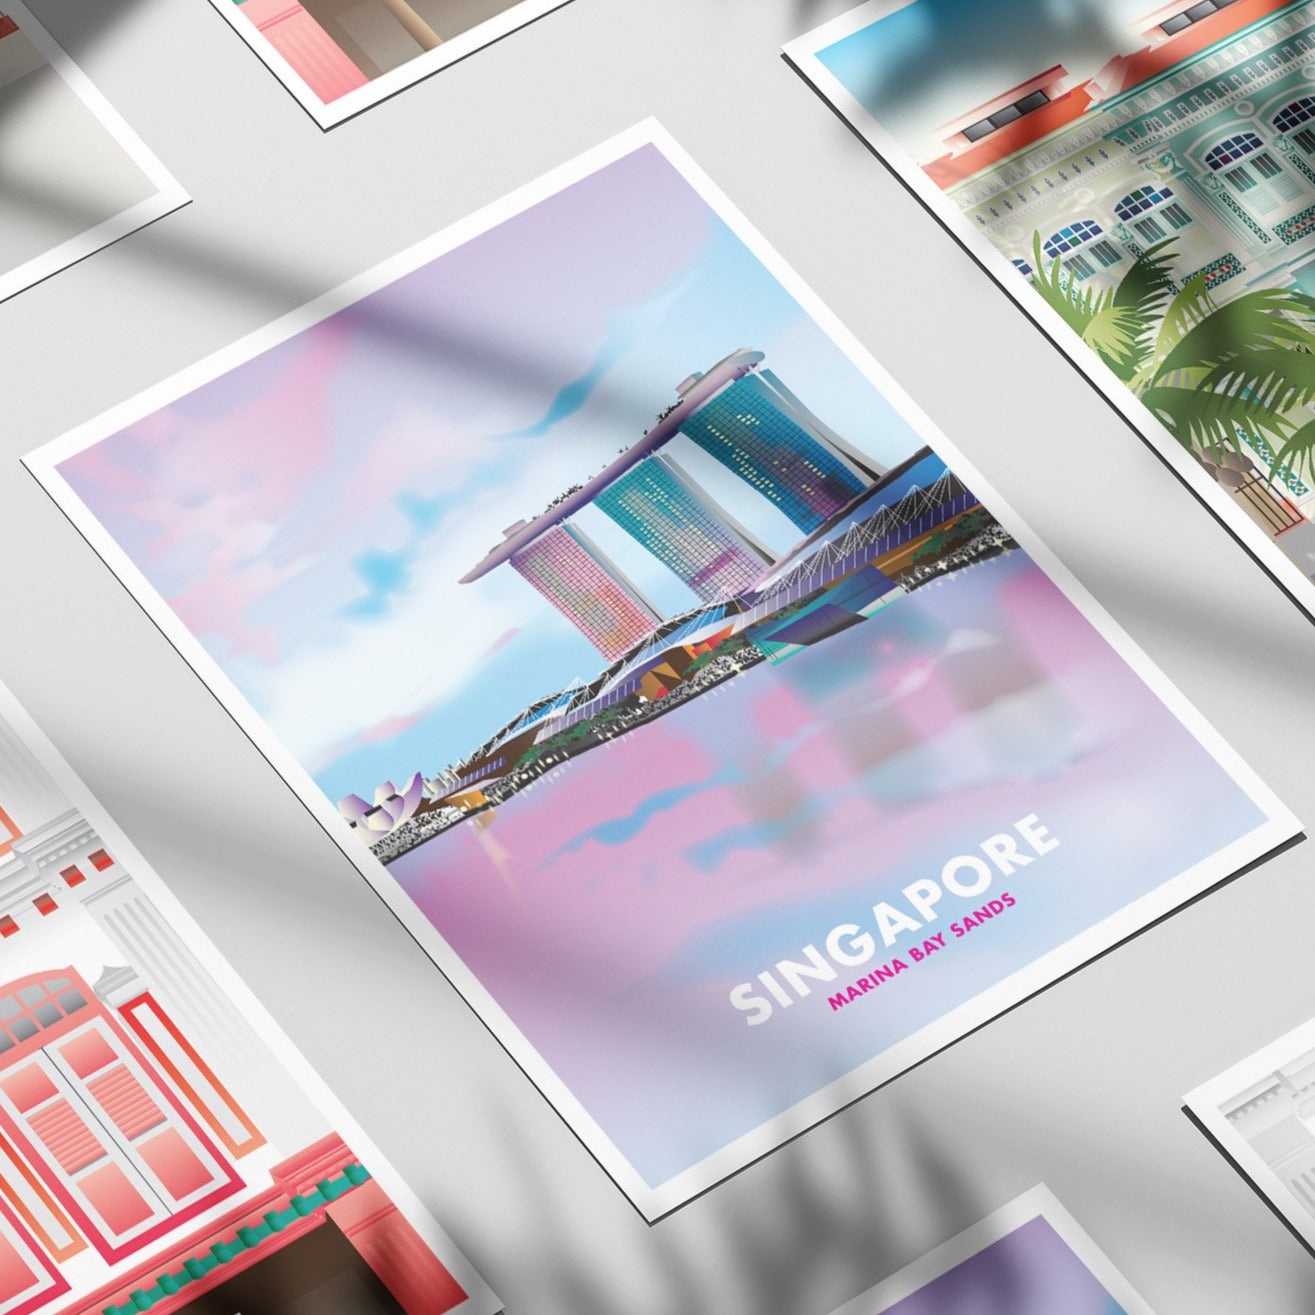 Singapore - Marina Bay Sands Sunset Illustrated Print